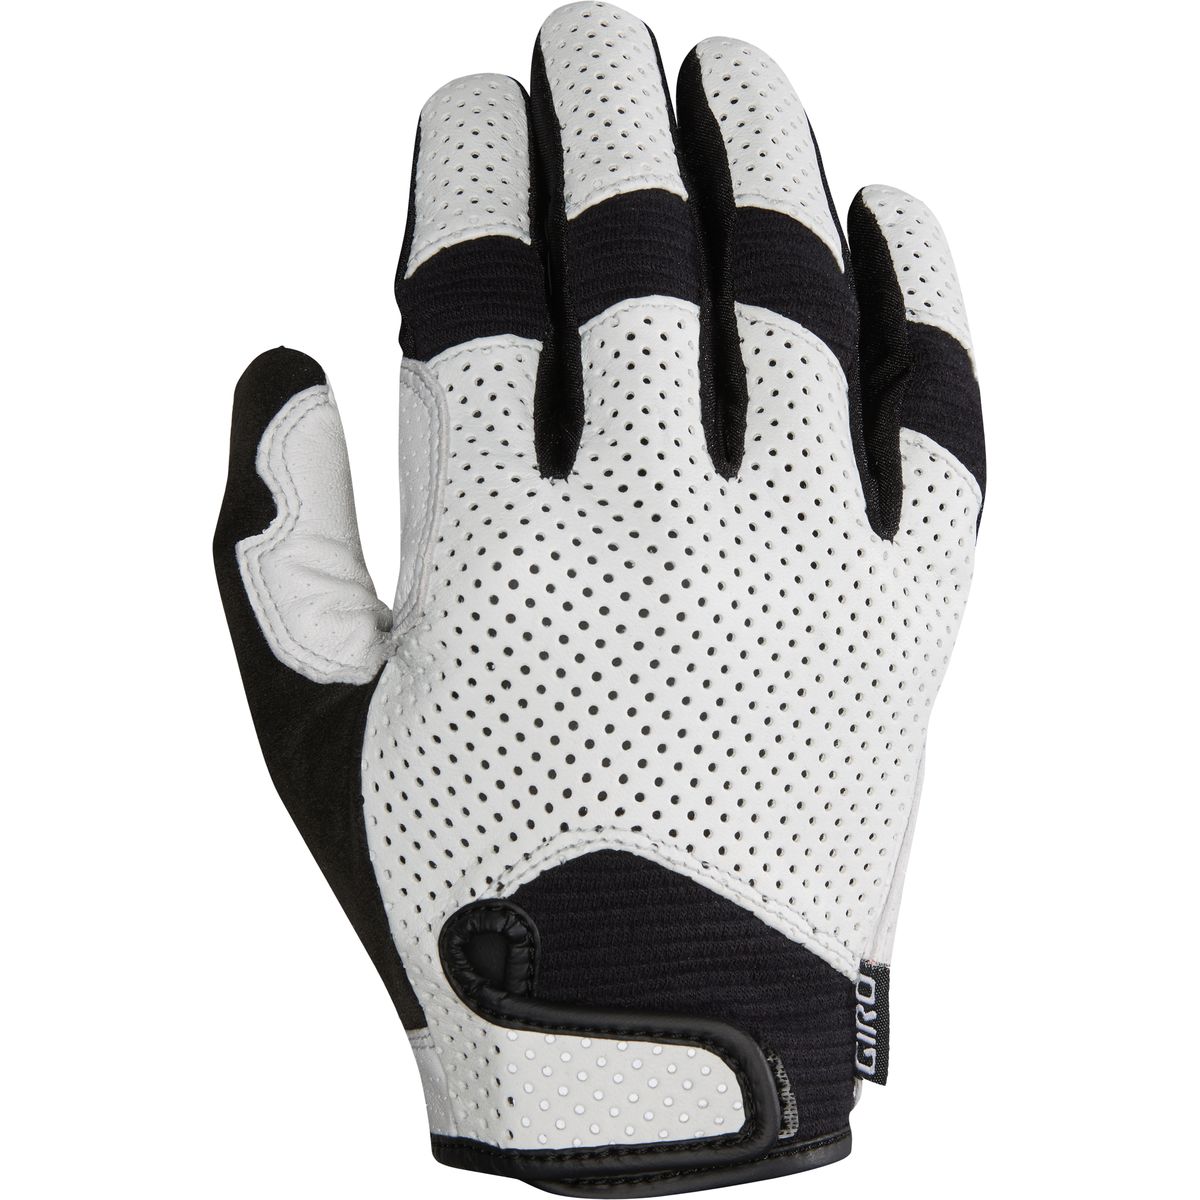 Giro LX LF Cycling Gloves Men's